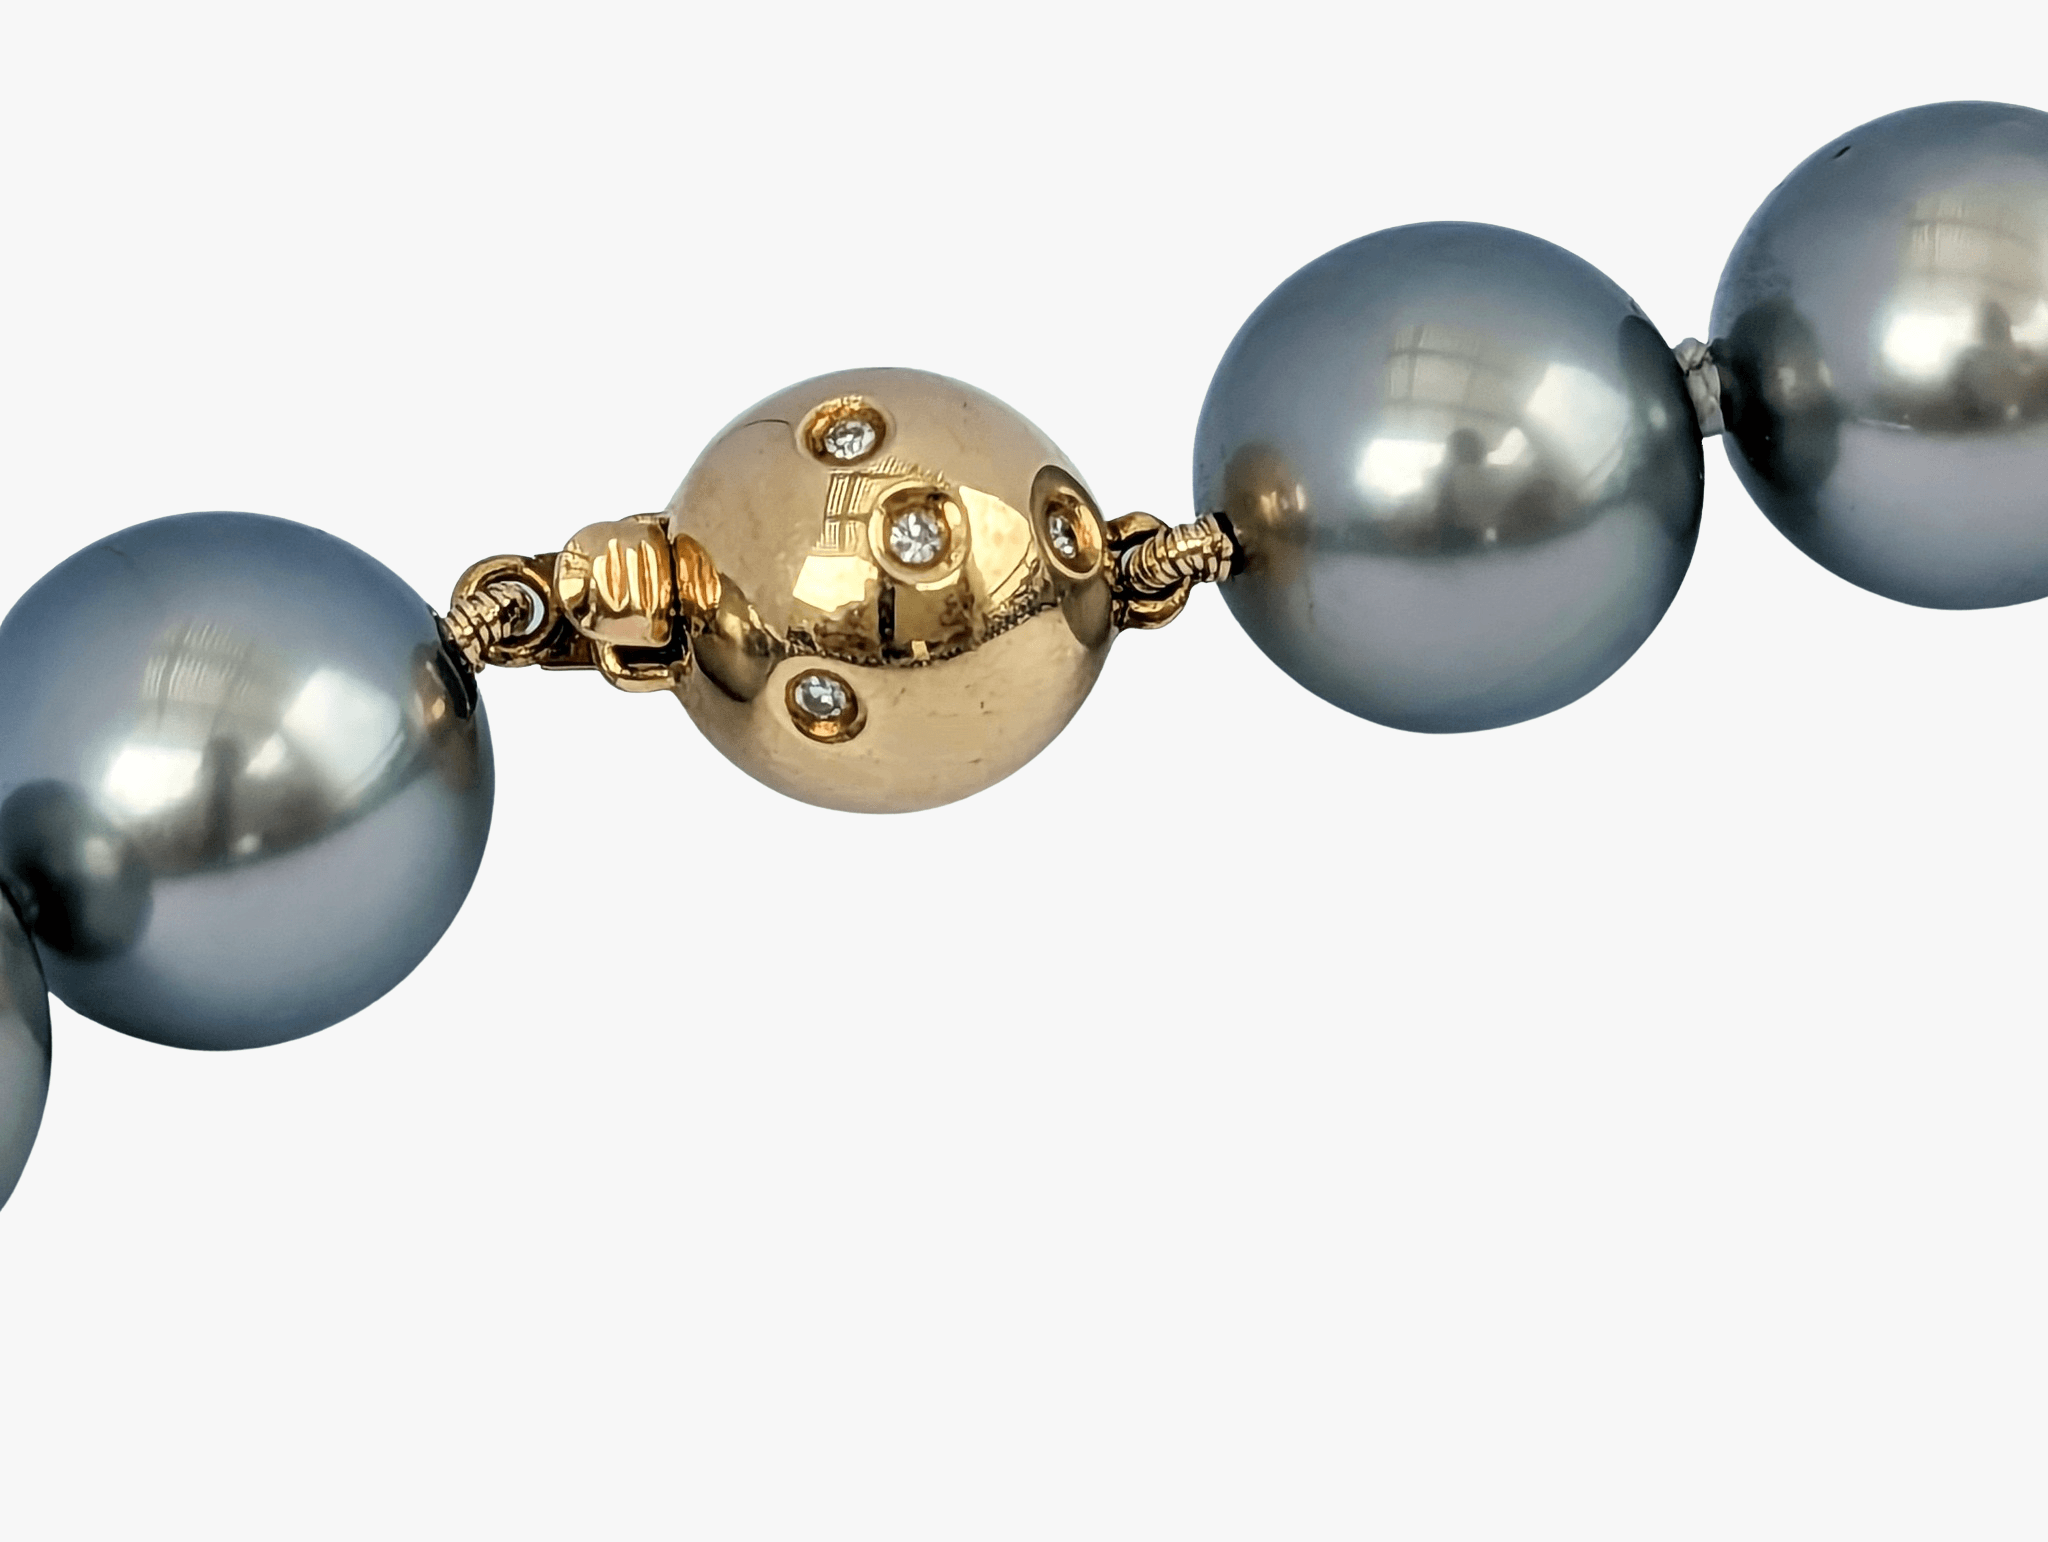 11-12mm AMAZING Silver Tahitian Pearl Necklace - Marina Korneev Fine Pearls